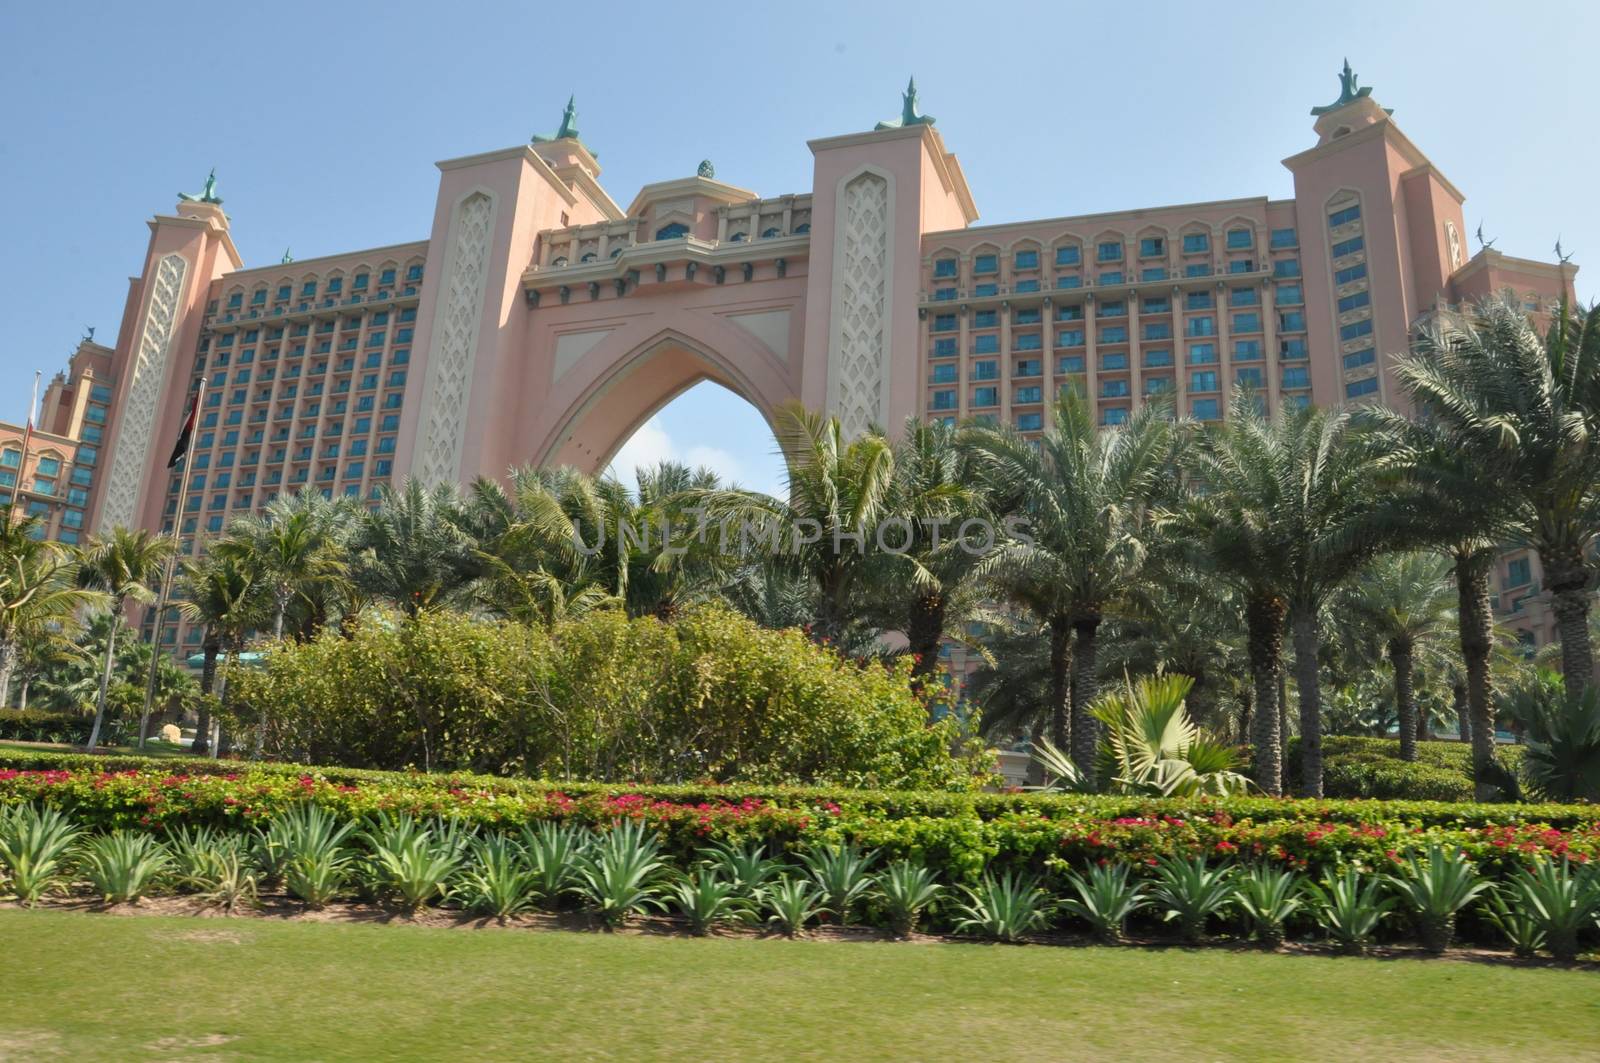 Atlantis The Palm in Dubai, UAE by sainaniritu